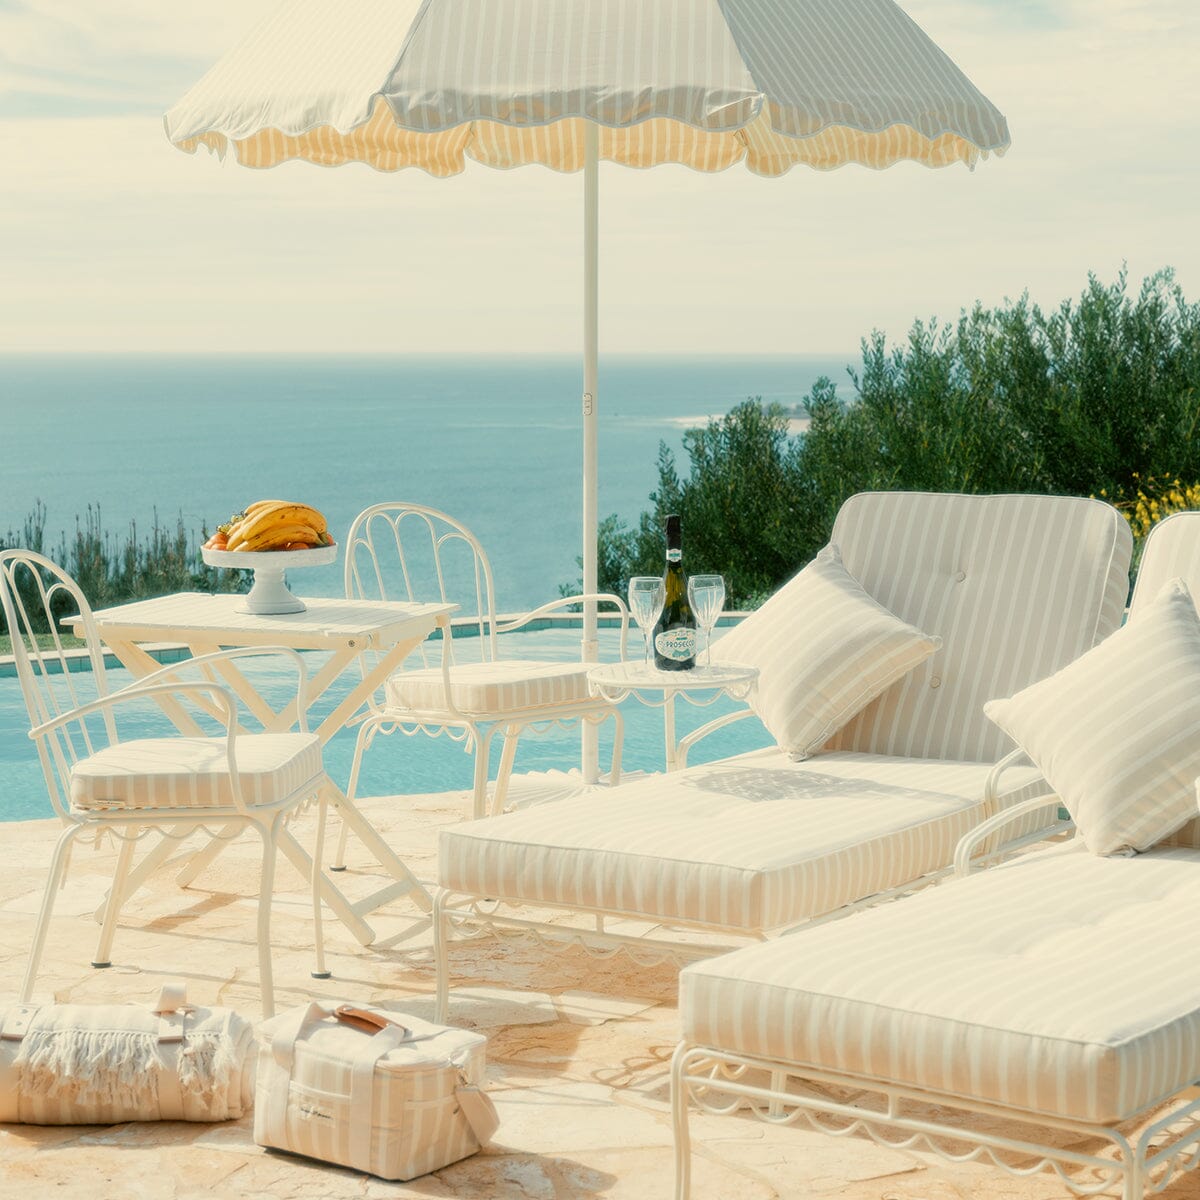 The Al Fresco Sun Lounger Cushion - Monaco Natural Stripe Al Fresco Sun Lounger Cushions Business & Pleasure Co Aus 